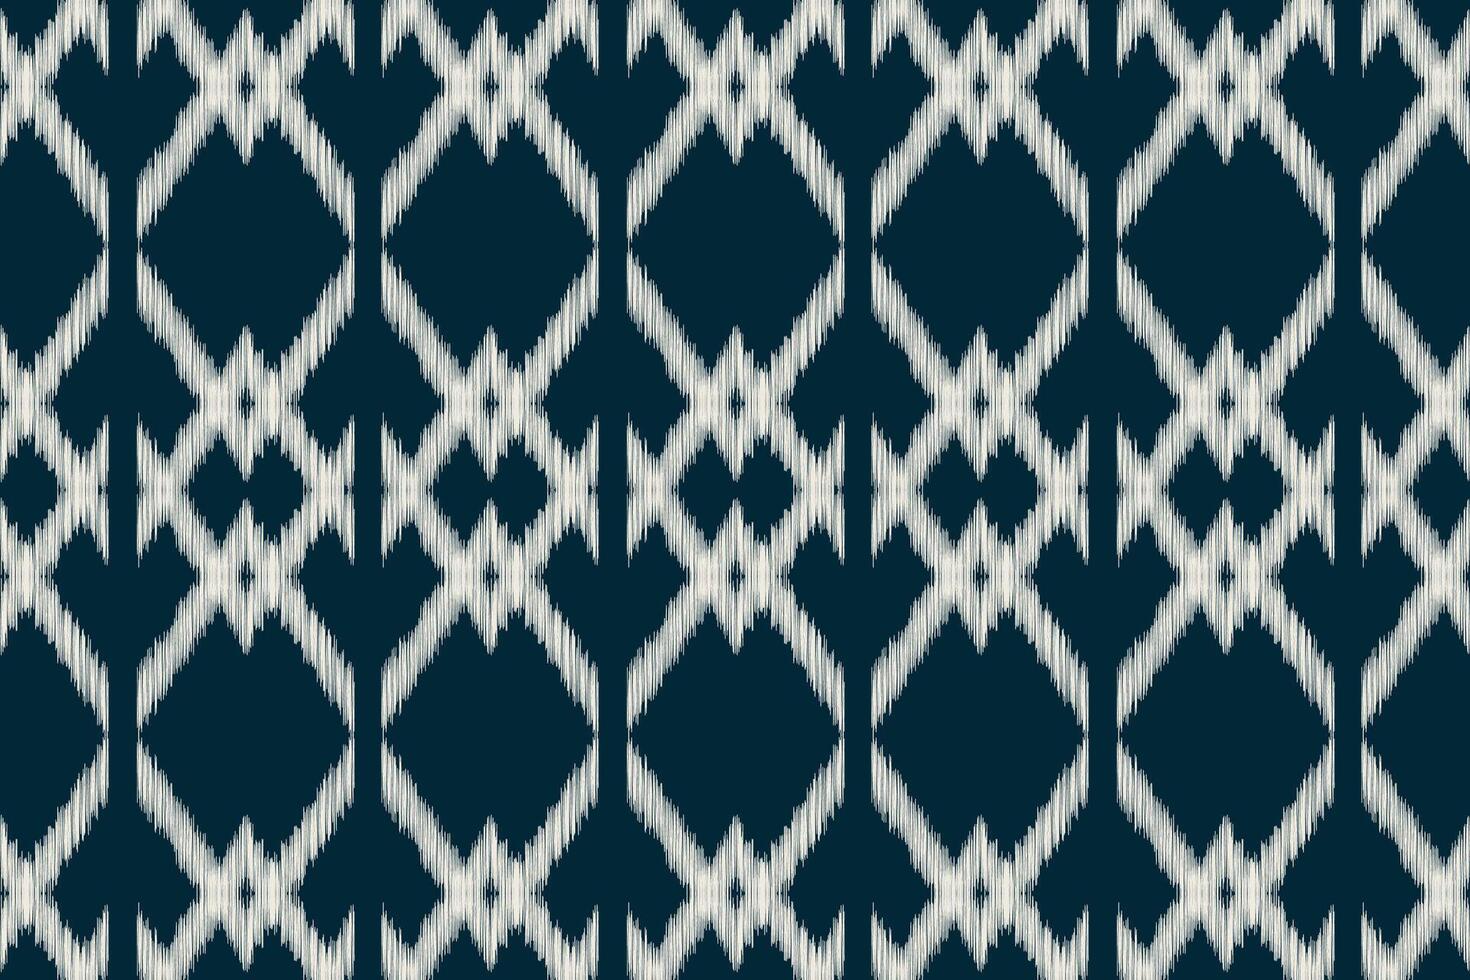 traditionell etnisk ikat motiv tyg mönster geometrisk stil.afrikansk ikat broderi etnisk orientalisk mönster blå bakgrund tapet. abstrakt,,illustration.texture,ram,dekoration. vektor